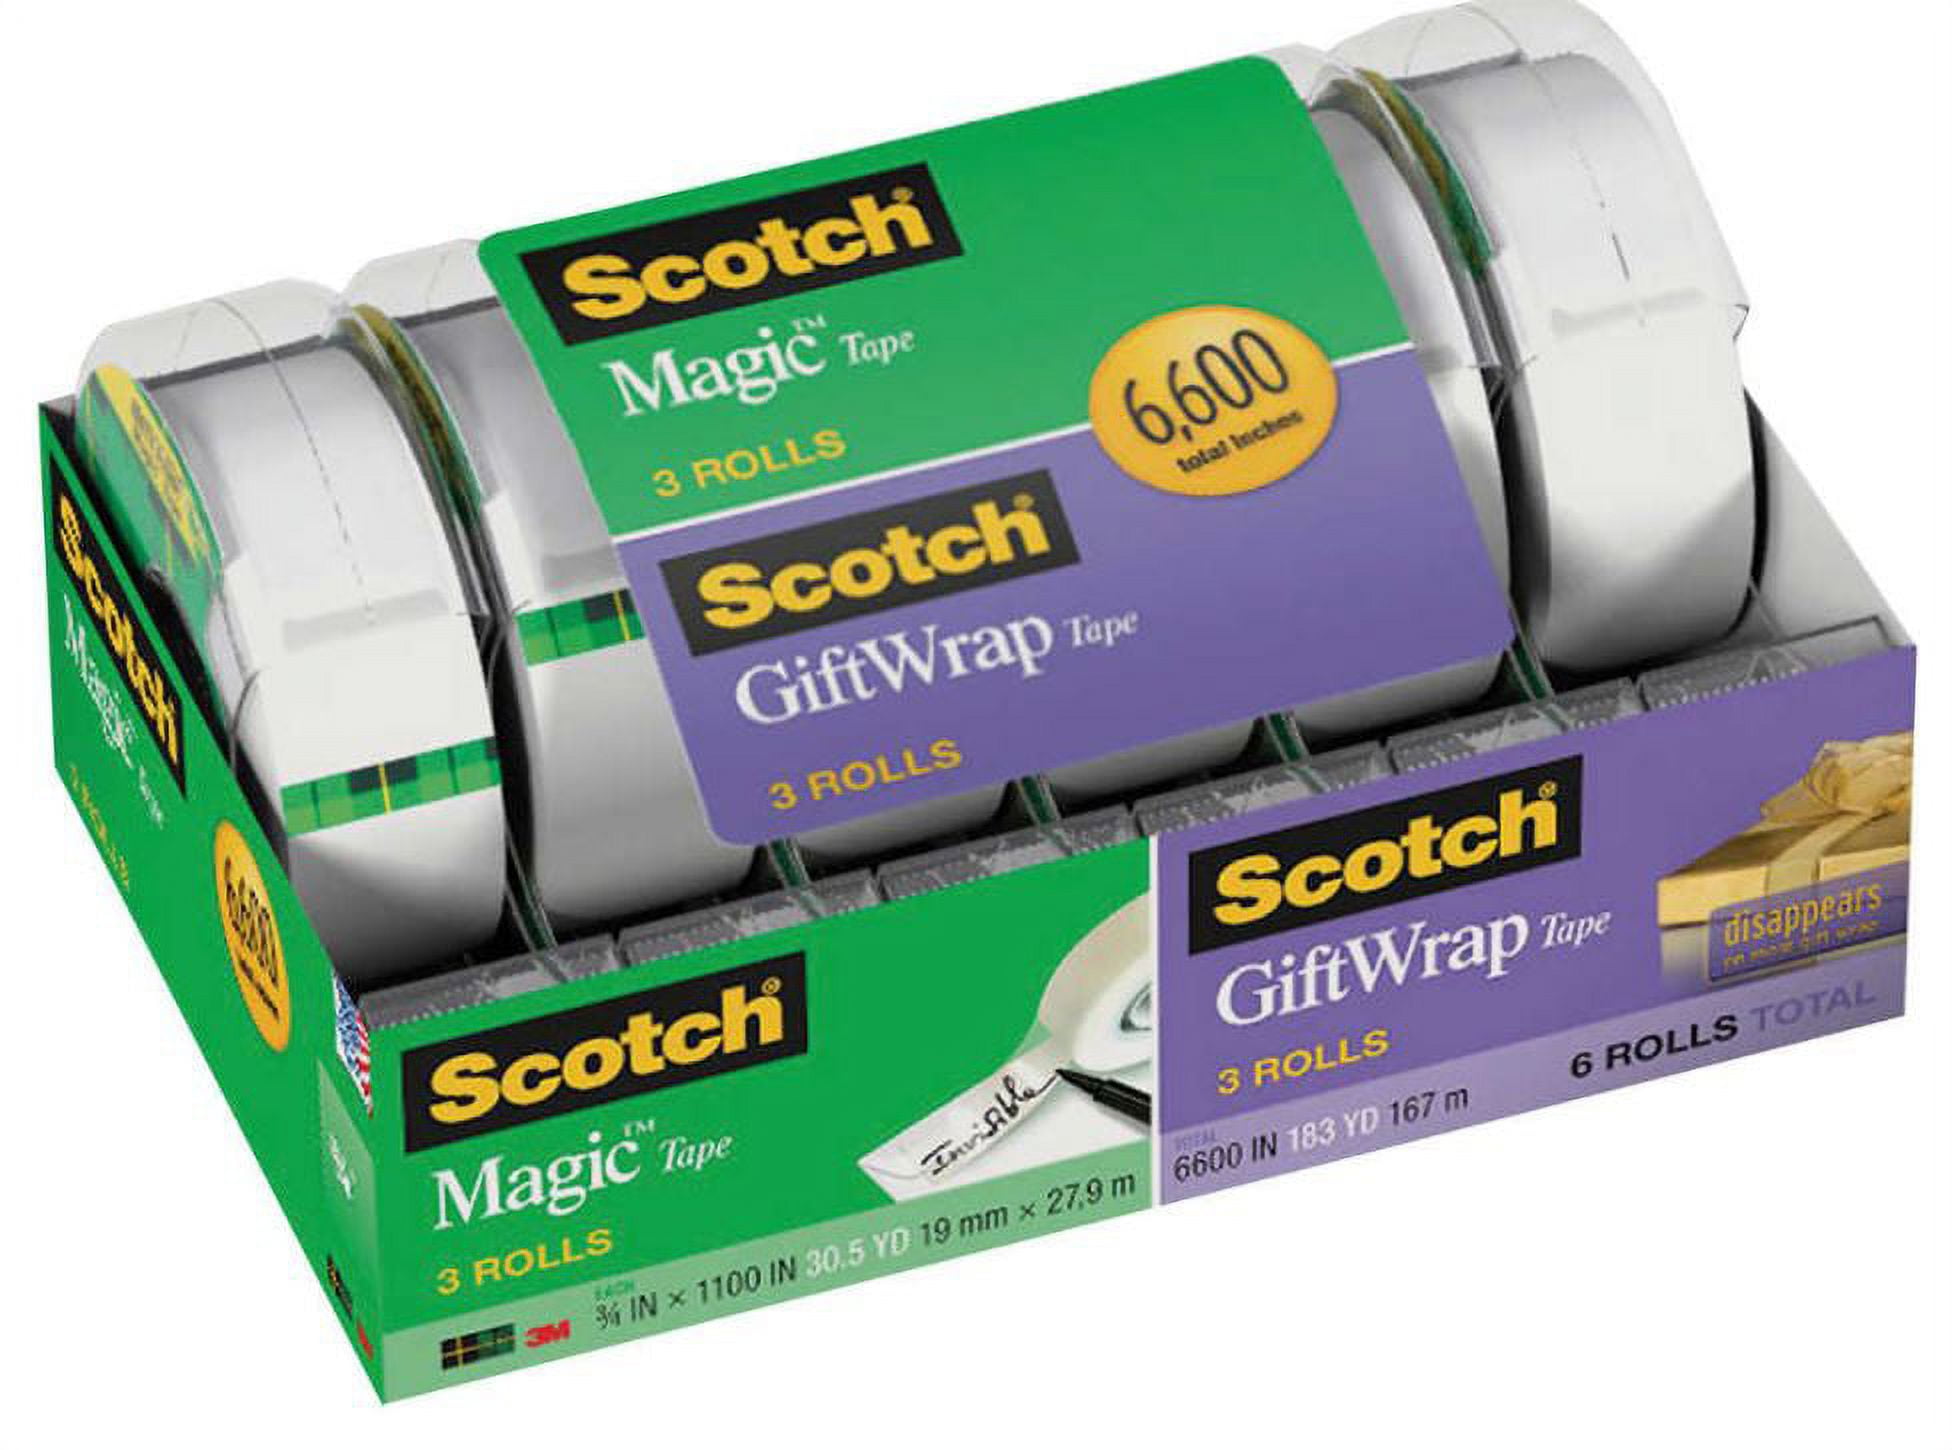 Scotch Desktop Tape Dispenser, White, 3/4 in. x 350 in., 1 Tape Dispenser  and 1 Roll/Pack